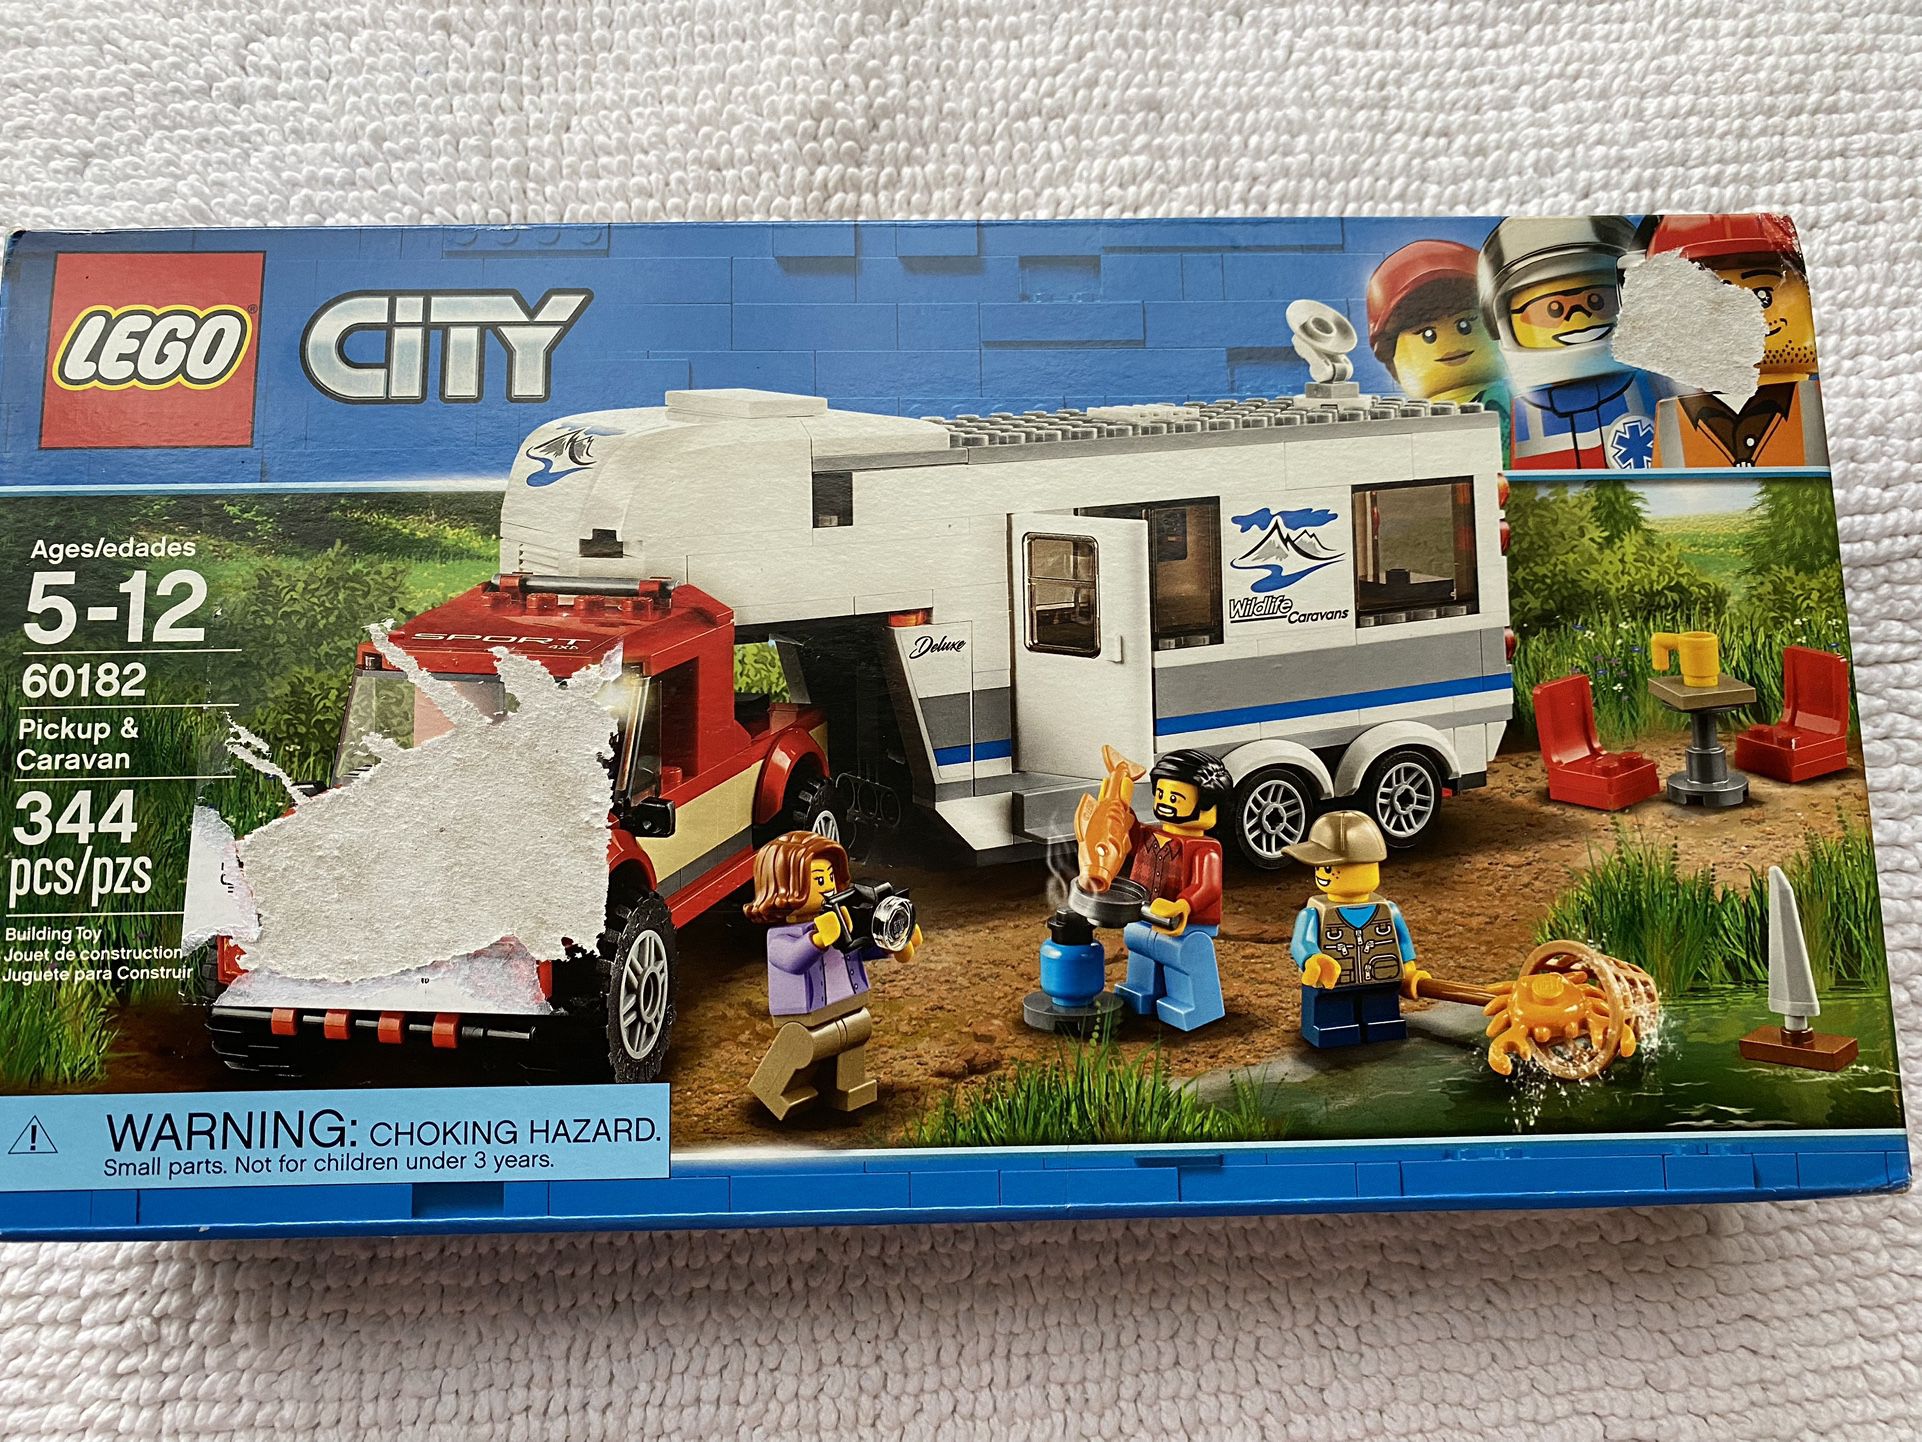 Lego City Pickup 60182 New Unopened Box for Sale La CA - OfferUp